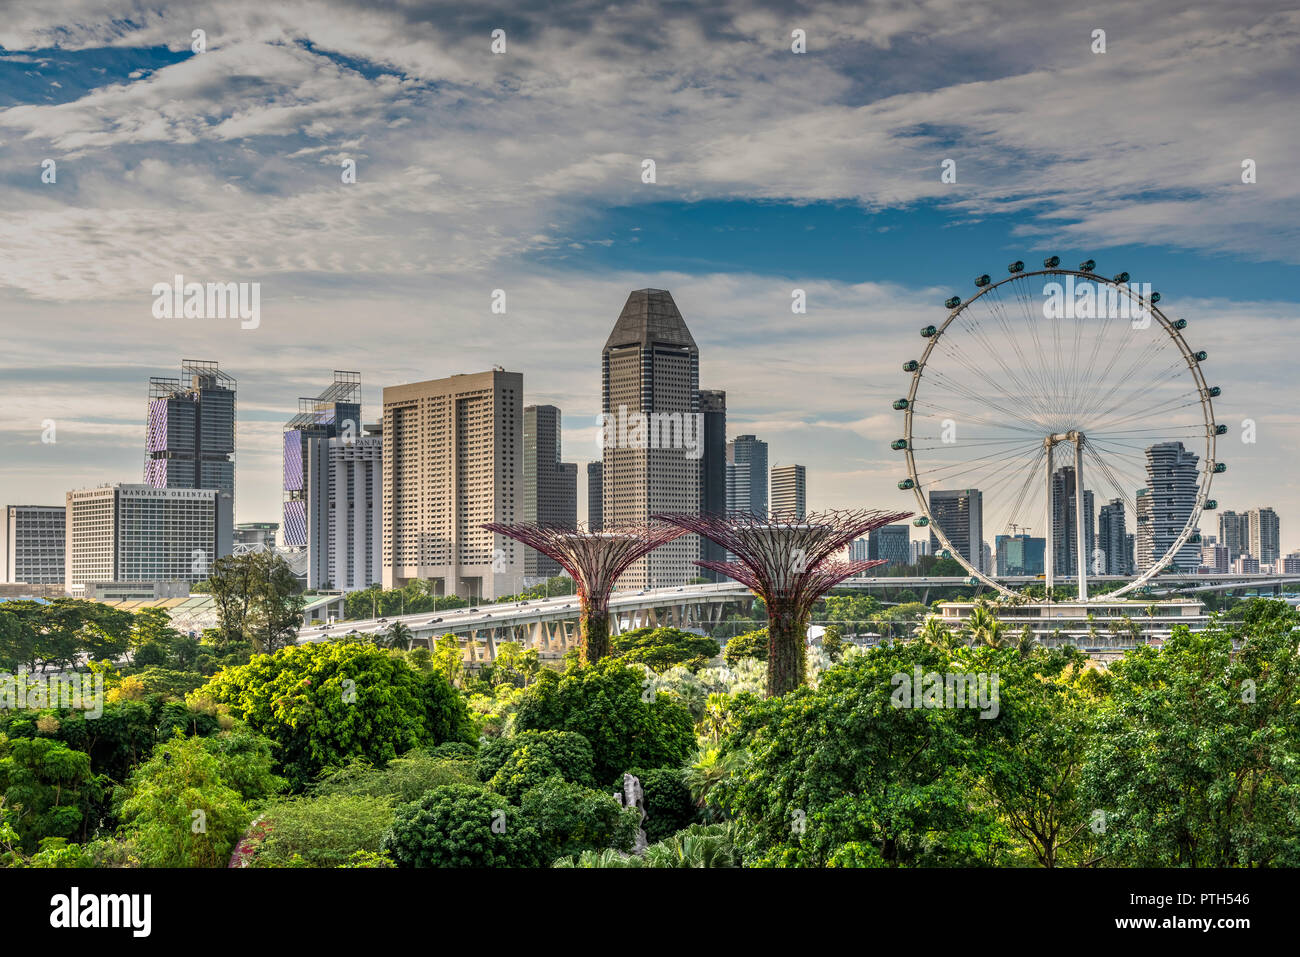 Singapore Flyer ferris wheel and city skyline behind, Singapore Stock Photo